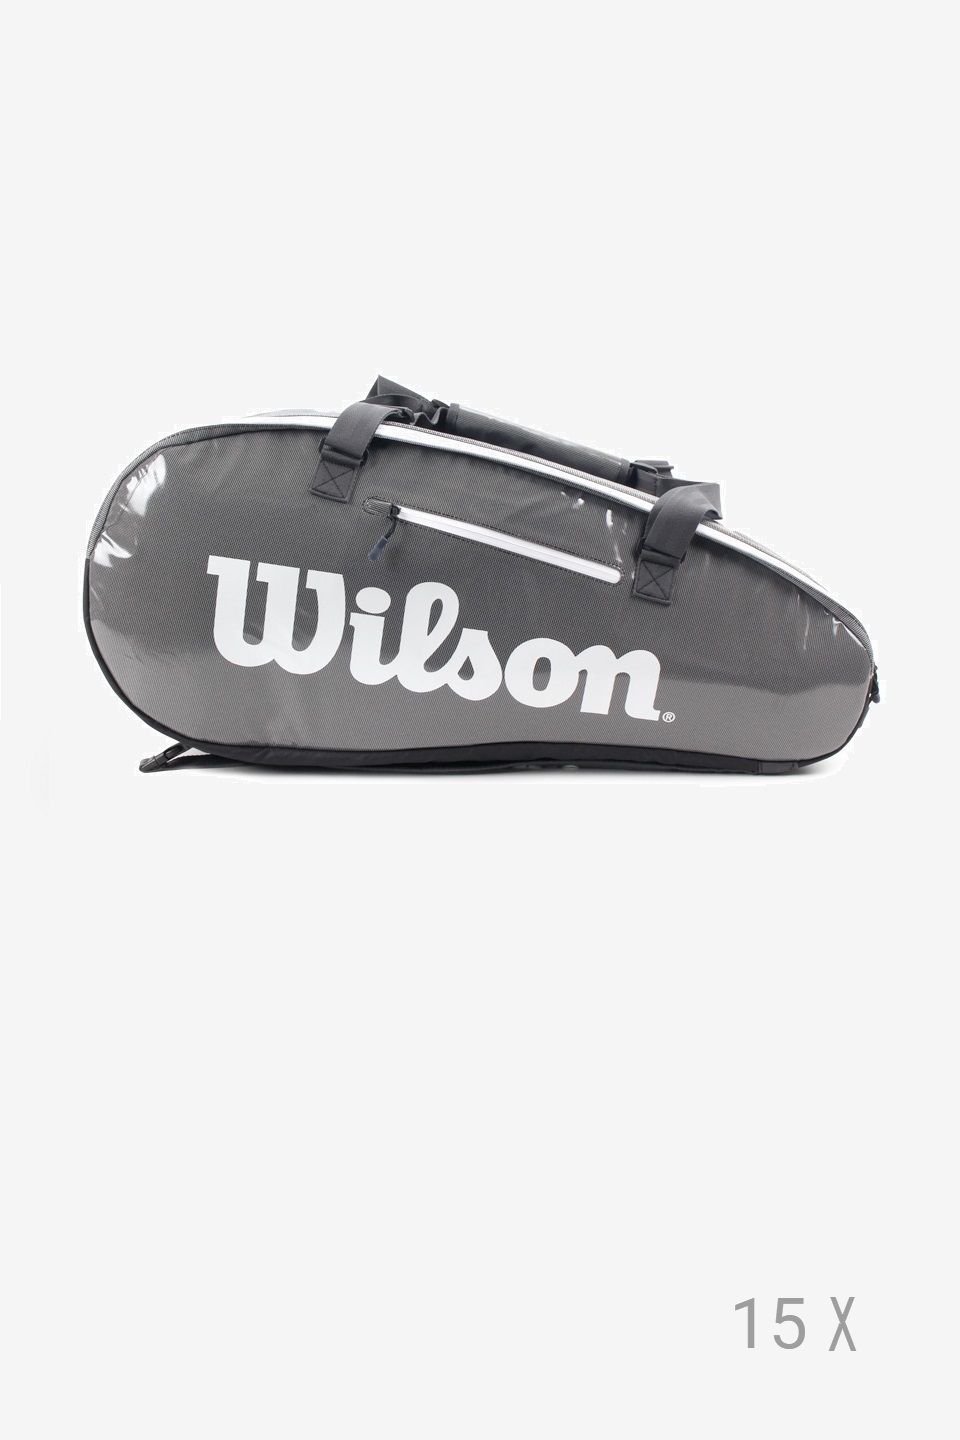 WİLSON - Wilson Super Tour 3 15X Tenis Çantası